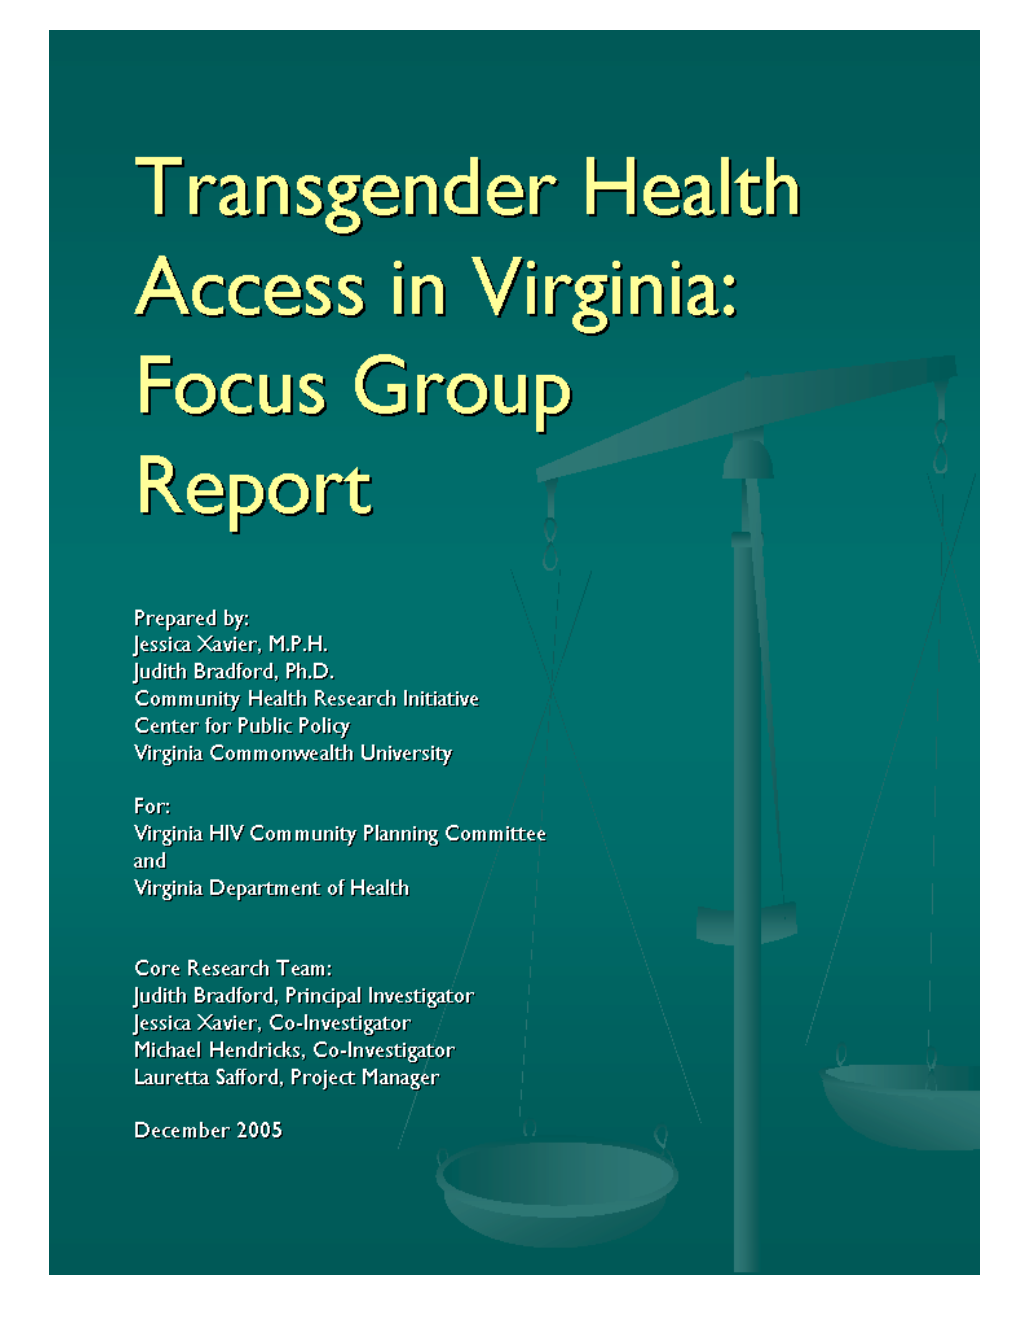 Transgender Health Access in Virginia: Focus Group Report